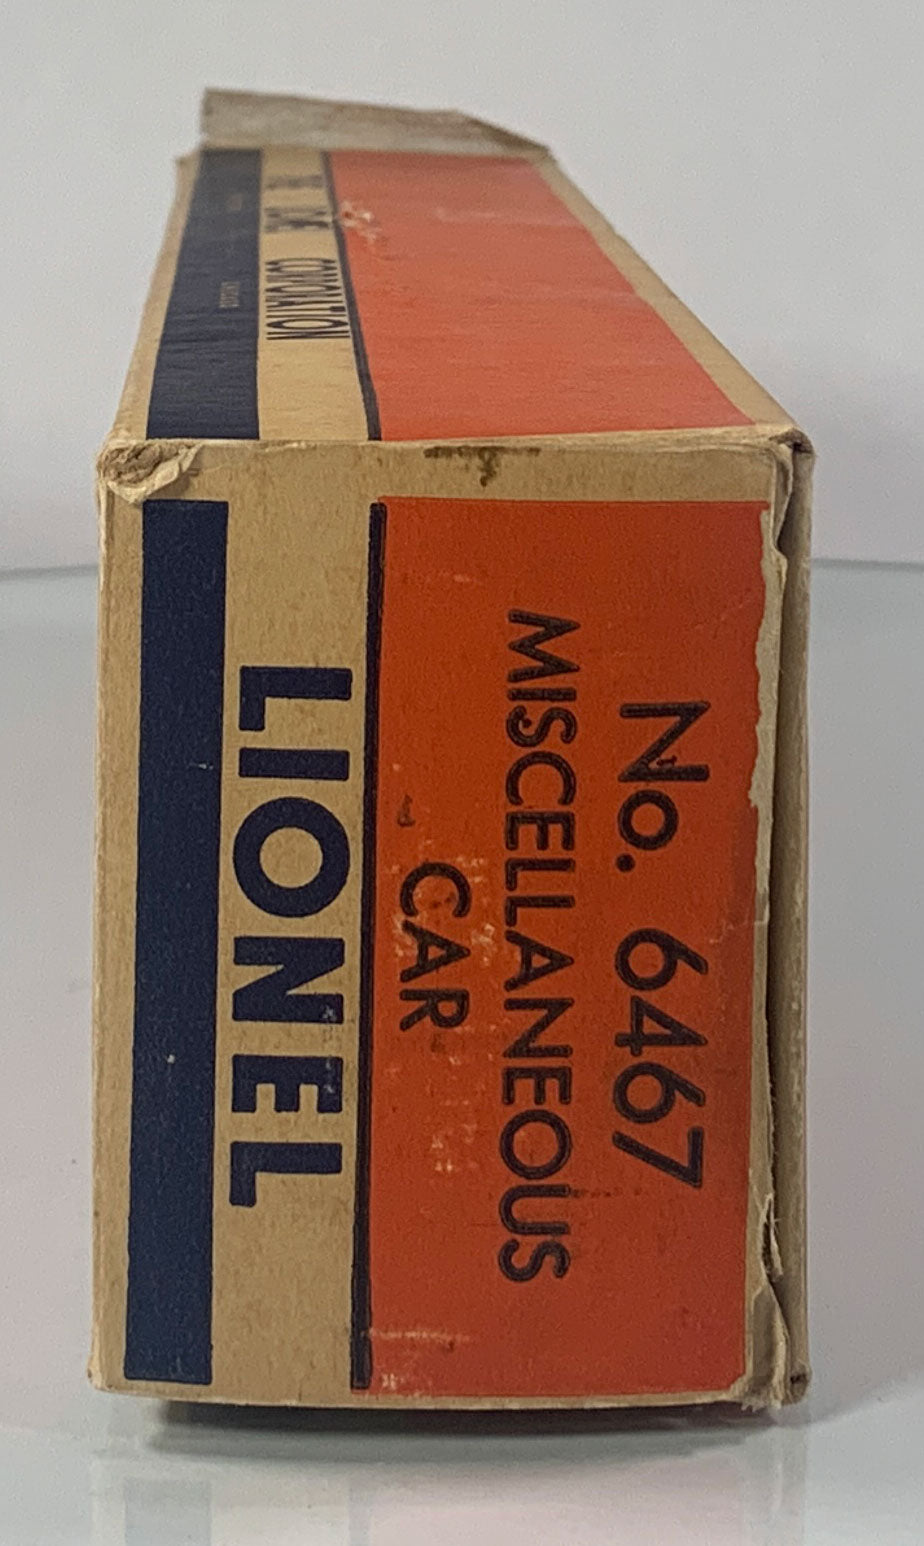 LIONEL • O GAUGE • 1956 Postwar 6467 (Miscellaneous) Bulkhead Car • Original Box • VERY GOOD COND